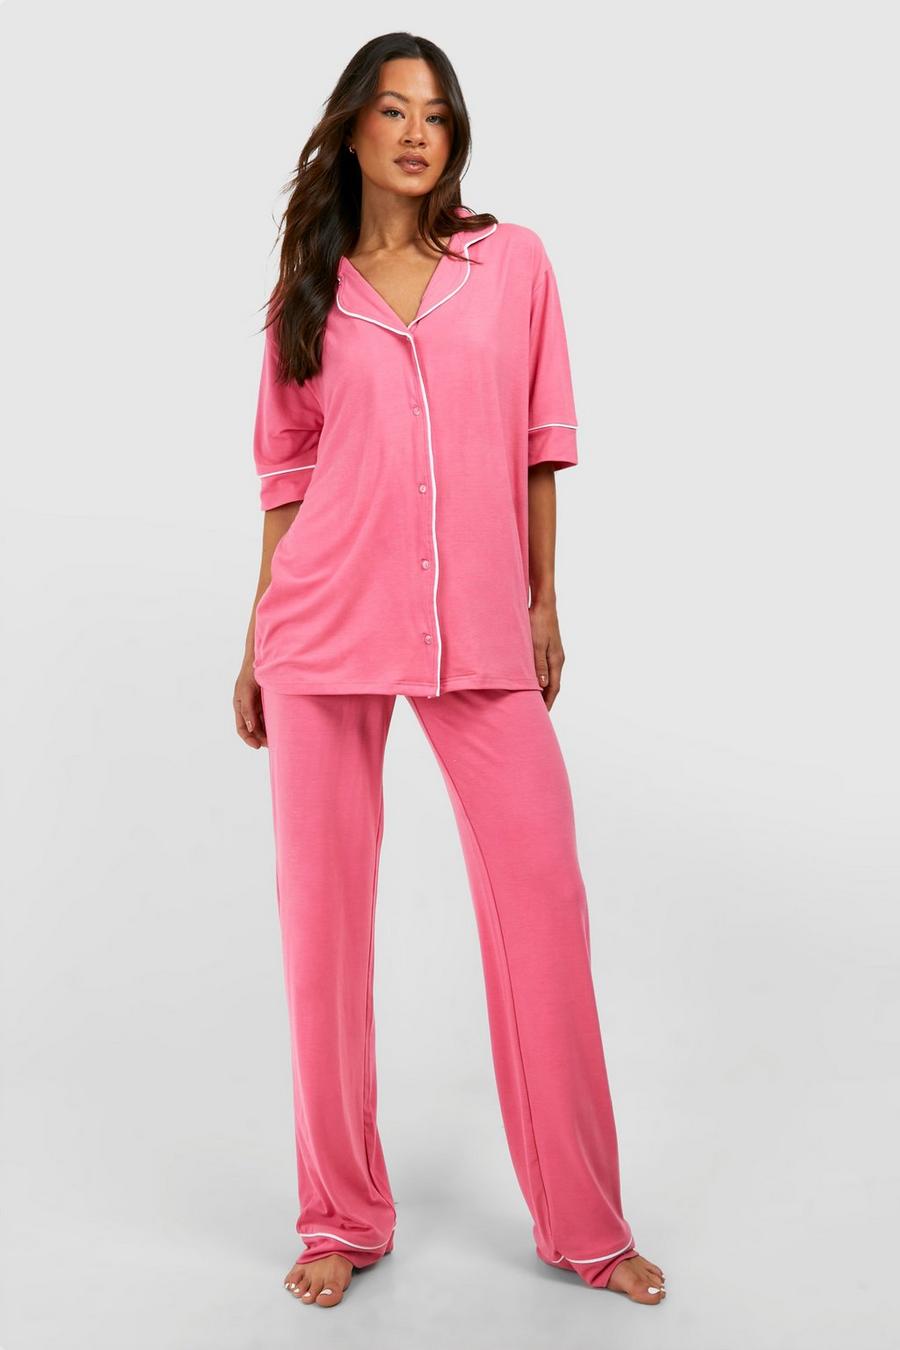 Hot pink Tall Jersey Knit Piping Pants Pj Set image number 1